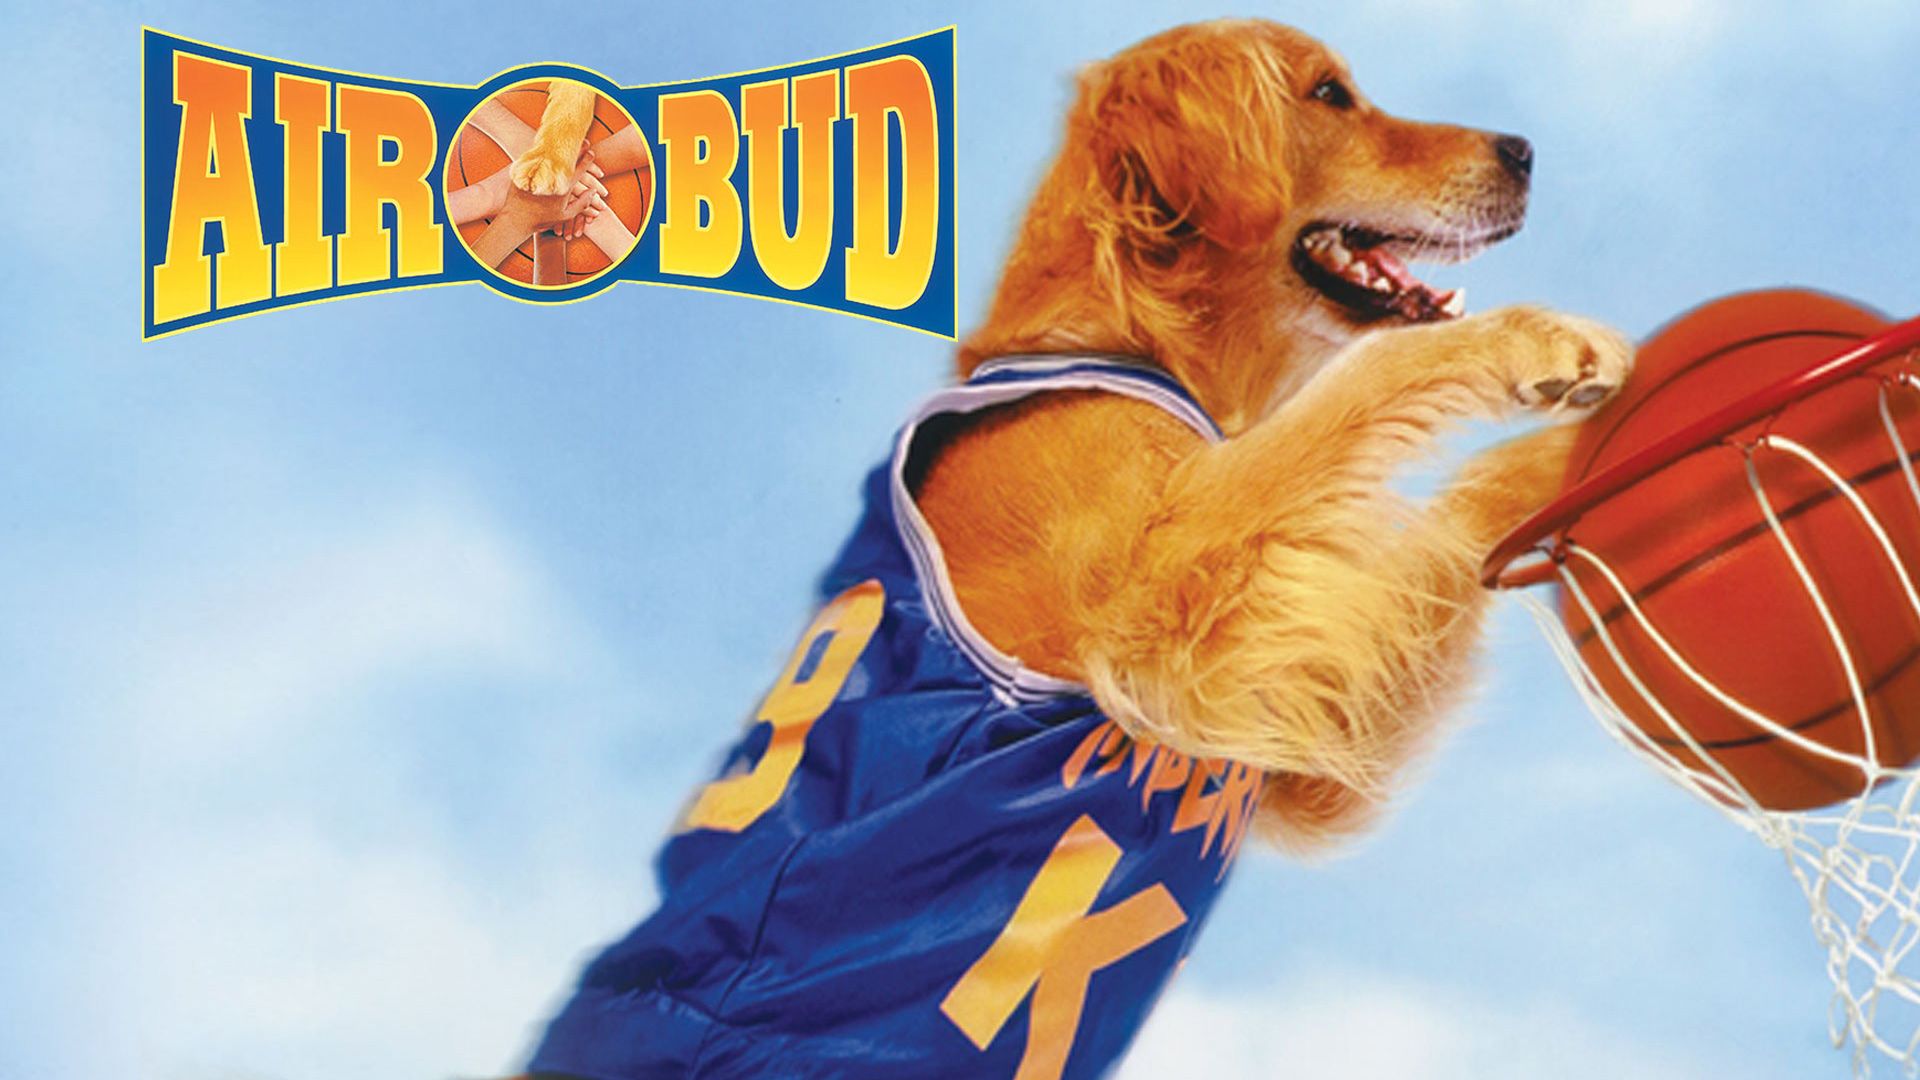 Watch Air Bud: World Pup